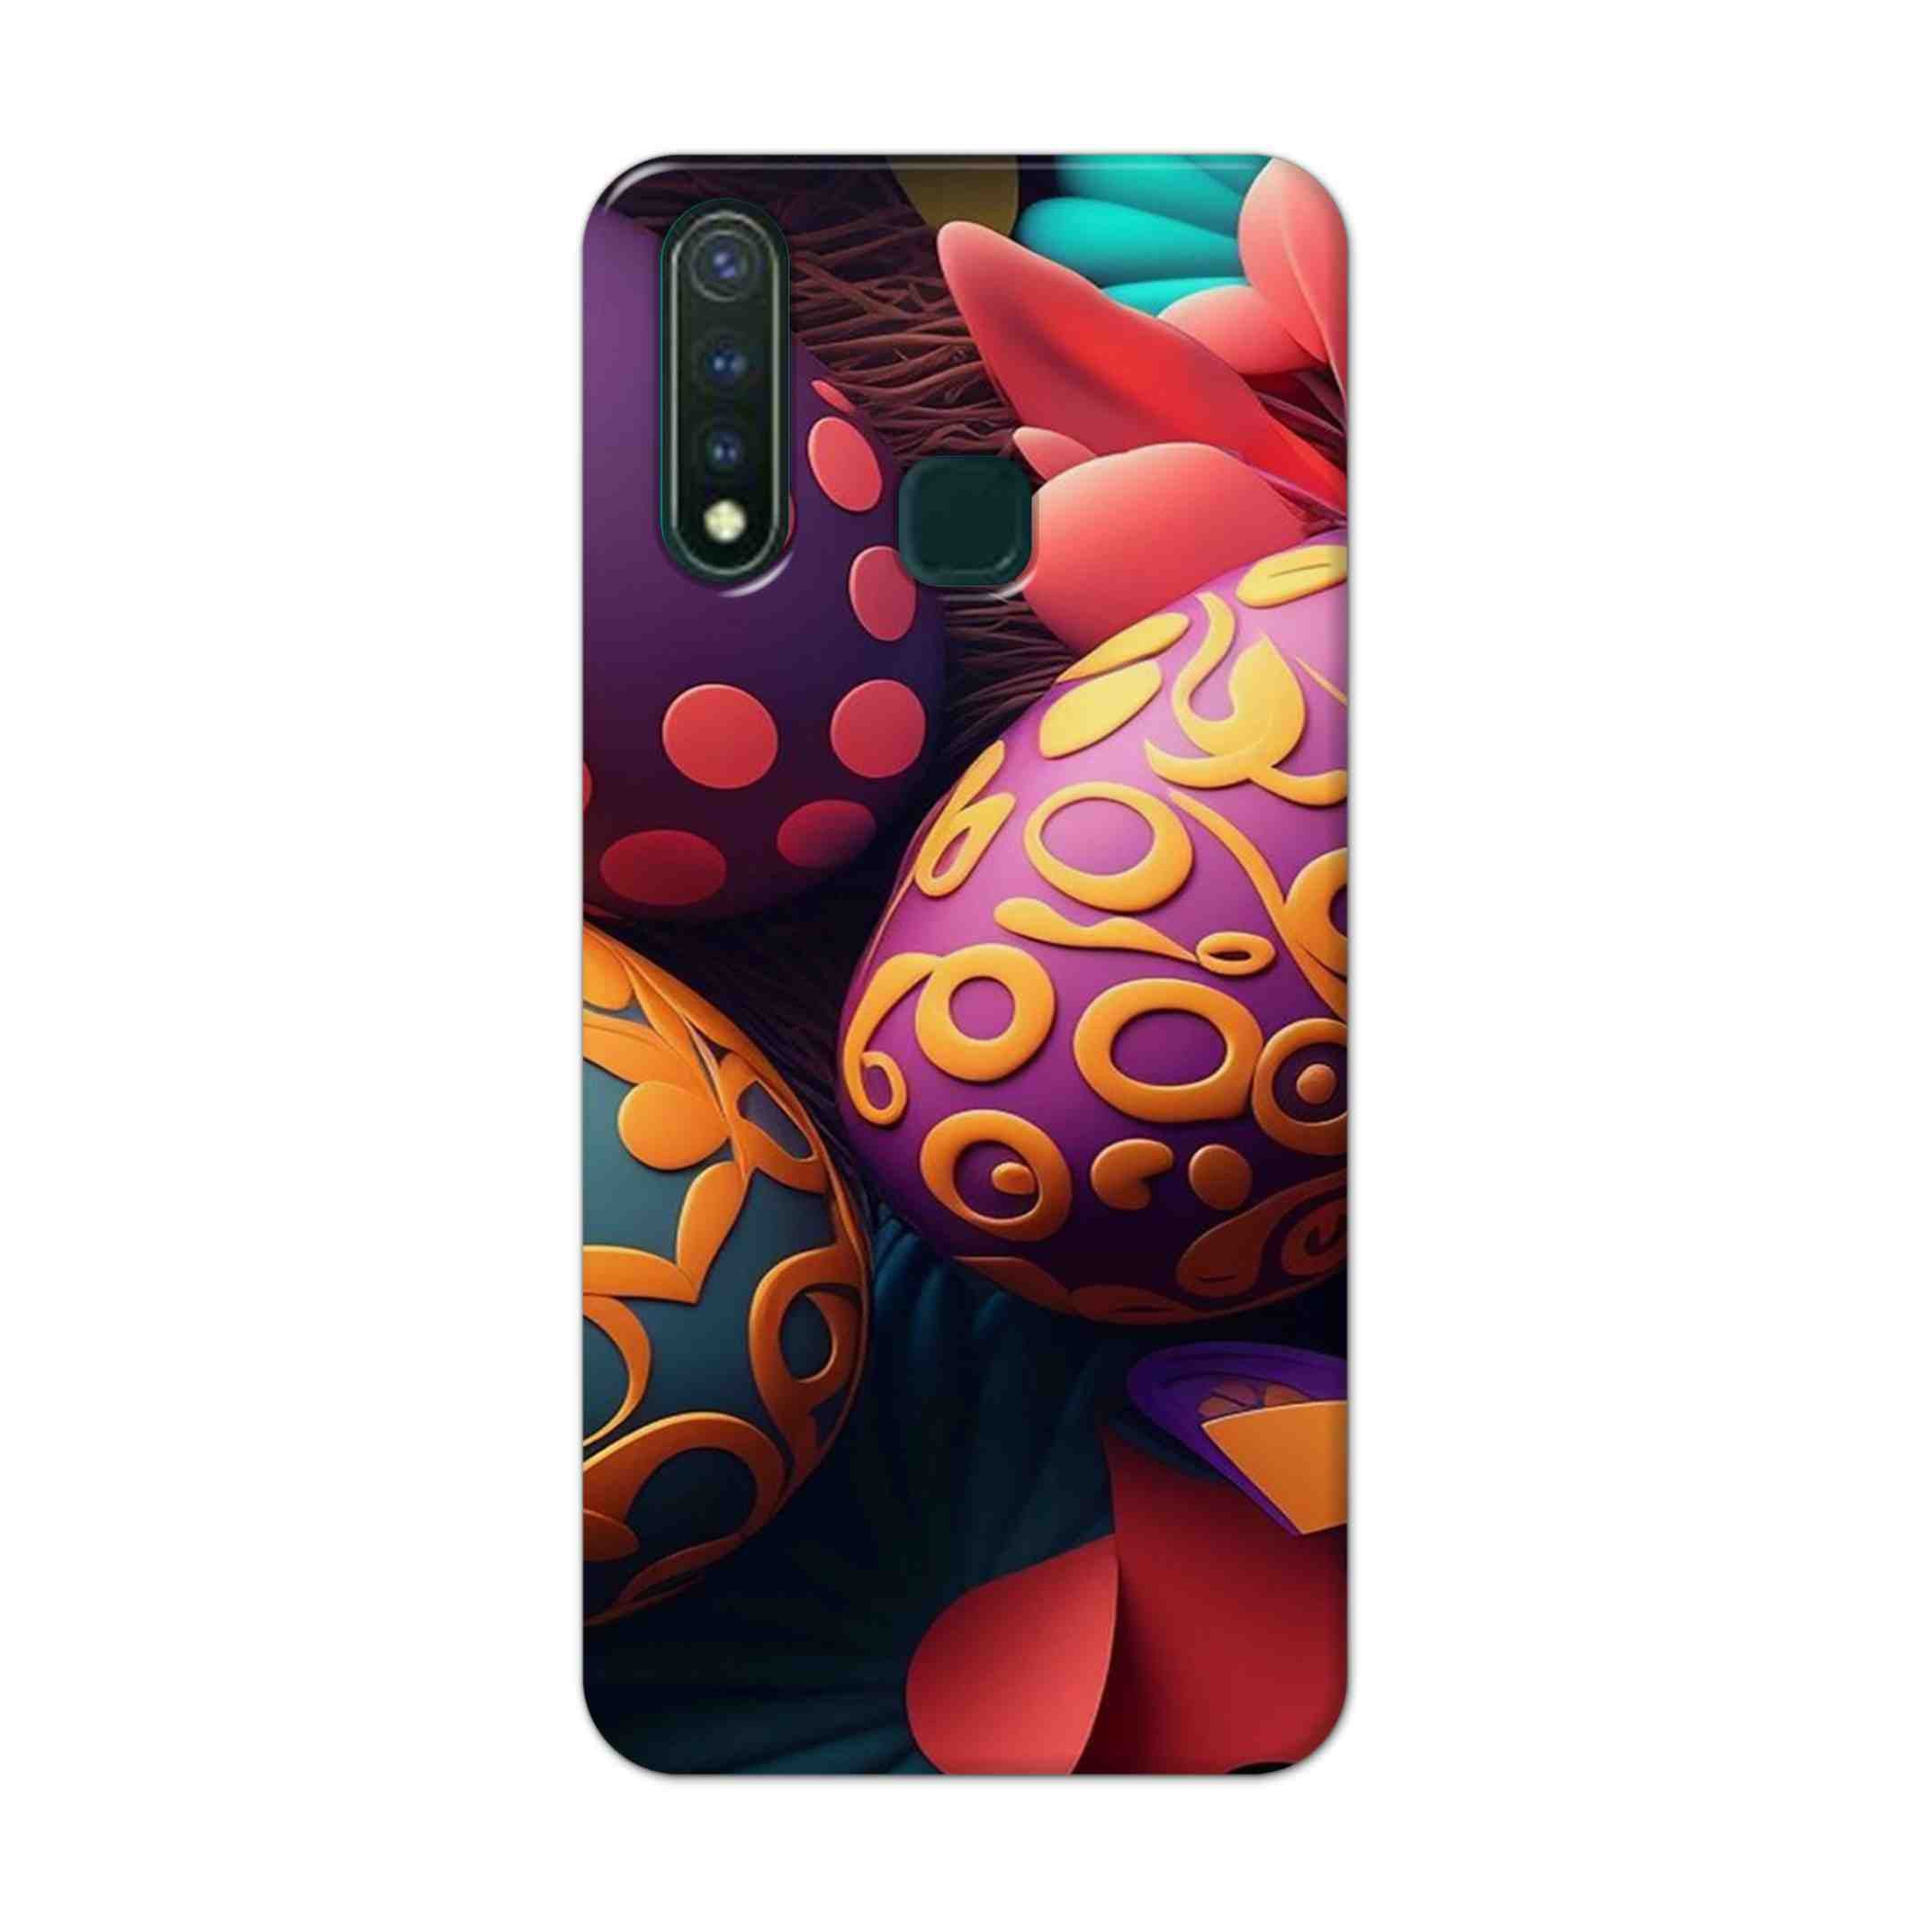 Buy Easter Egg Hard Back Mobile Phone Case Cover For Vivo U20 Online